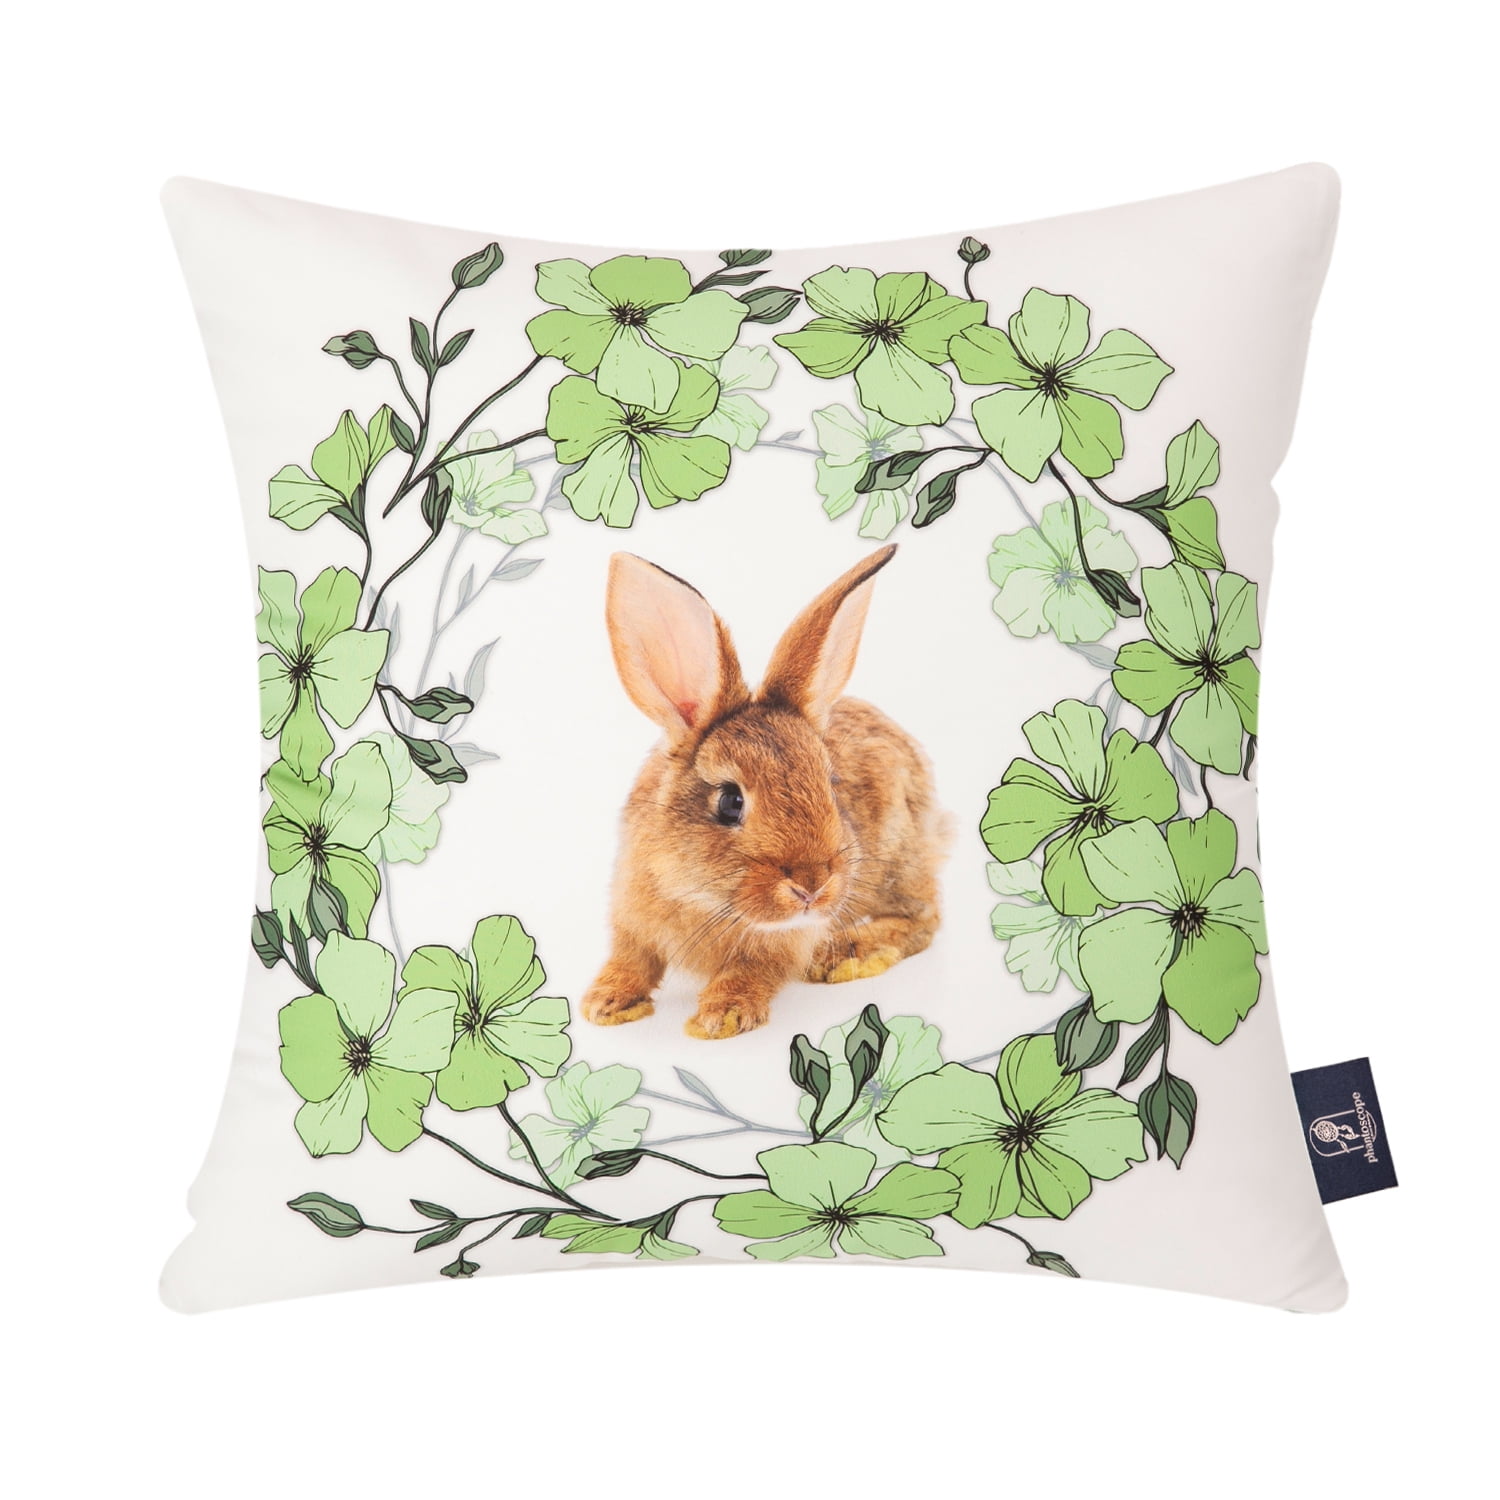 18x18 Multicolor Cute Bunny Gift Ideas Cute Bunny Pattern Throw Pillow